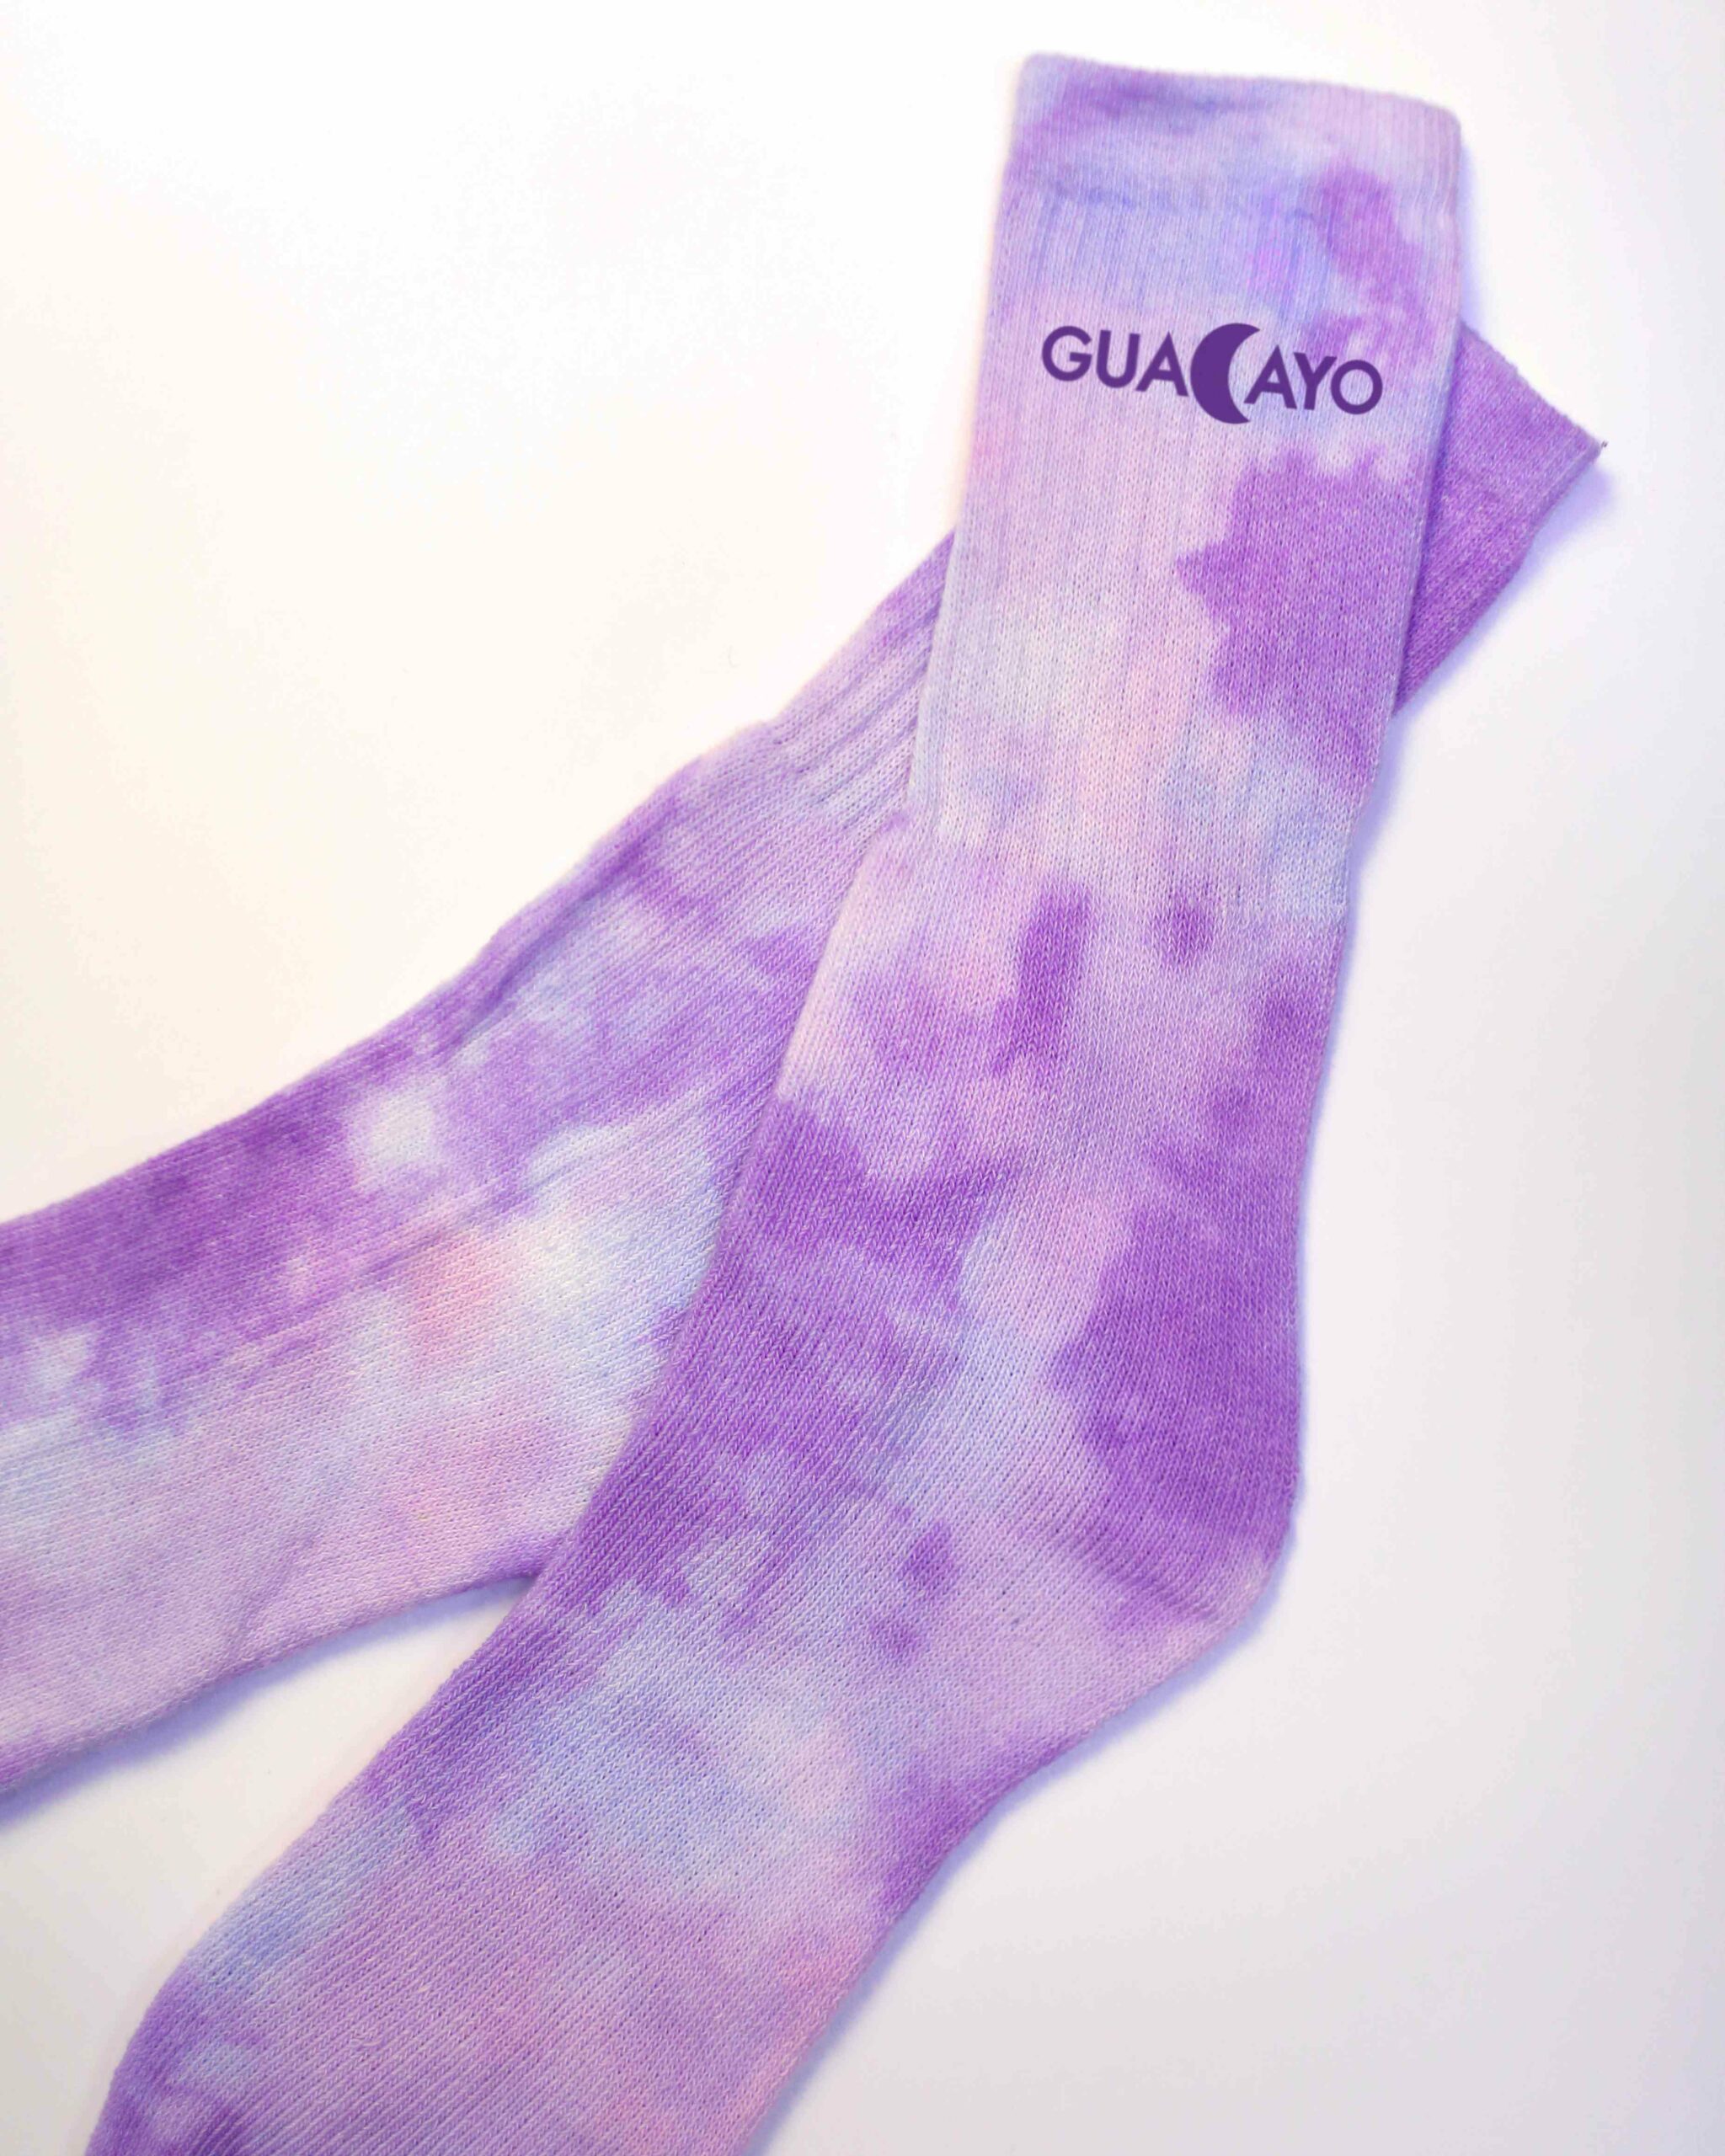 GUACAYO_Socken_01_4-5_klein